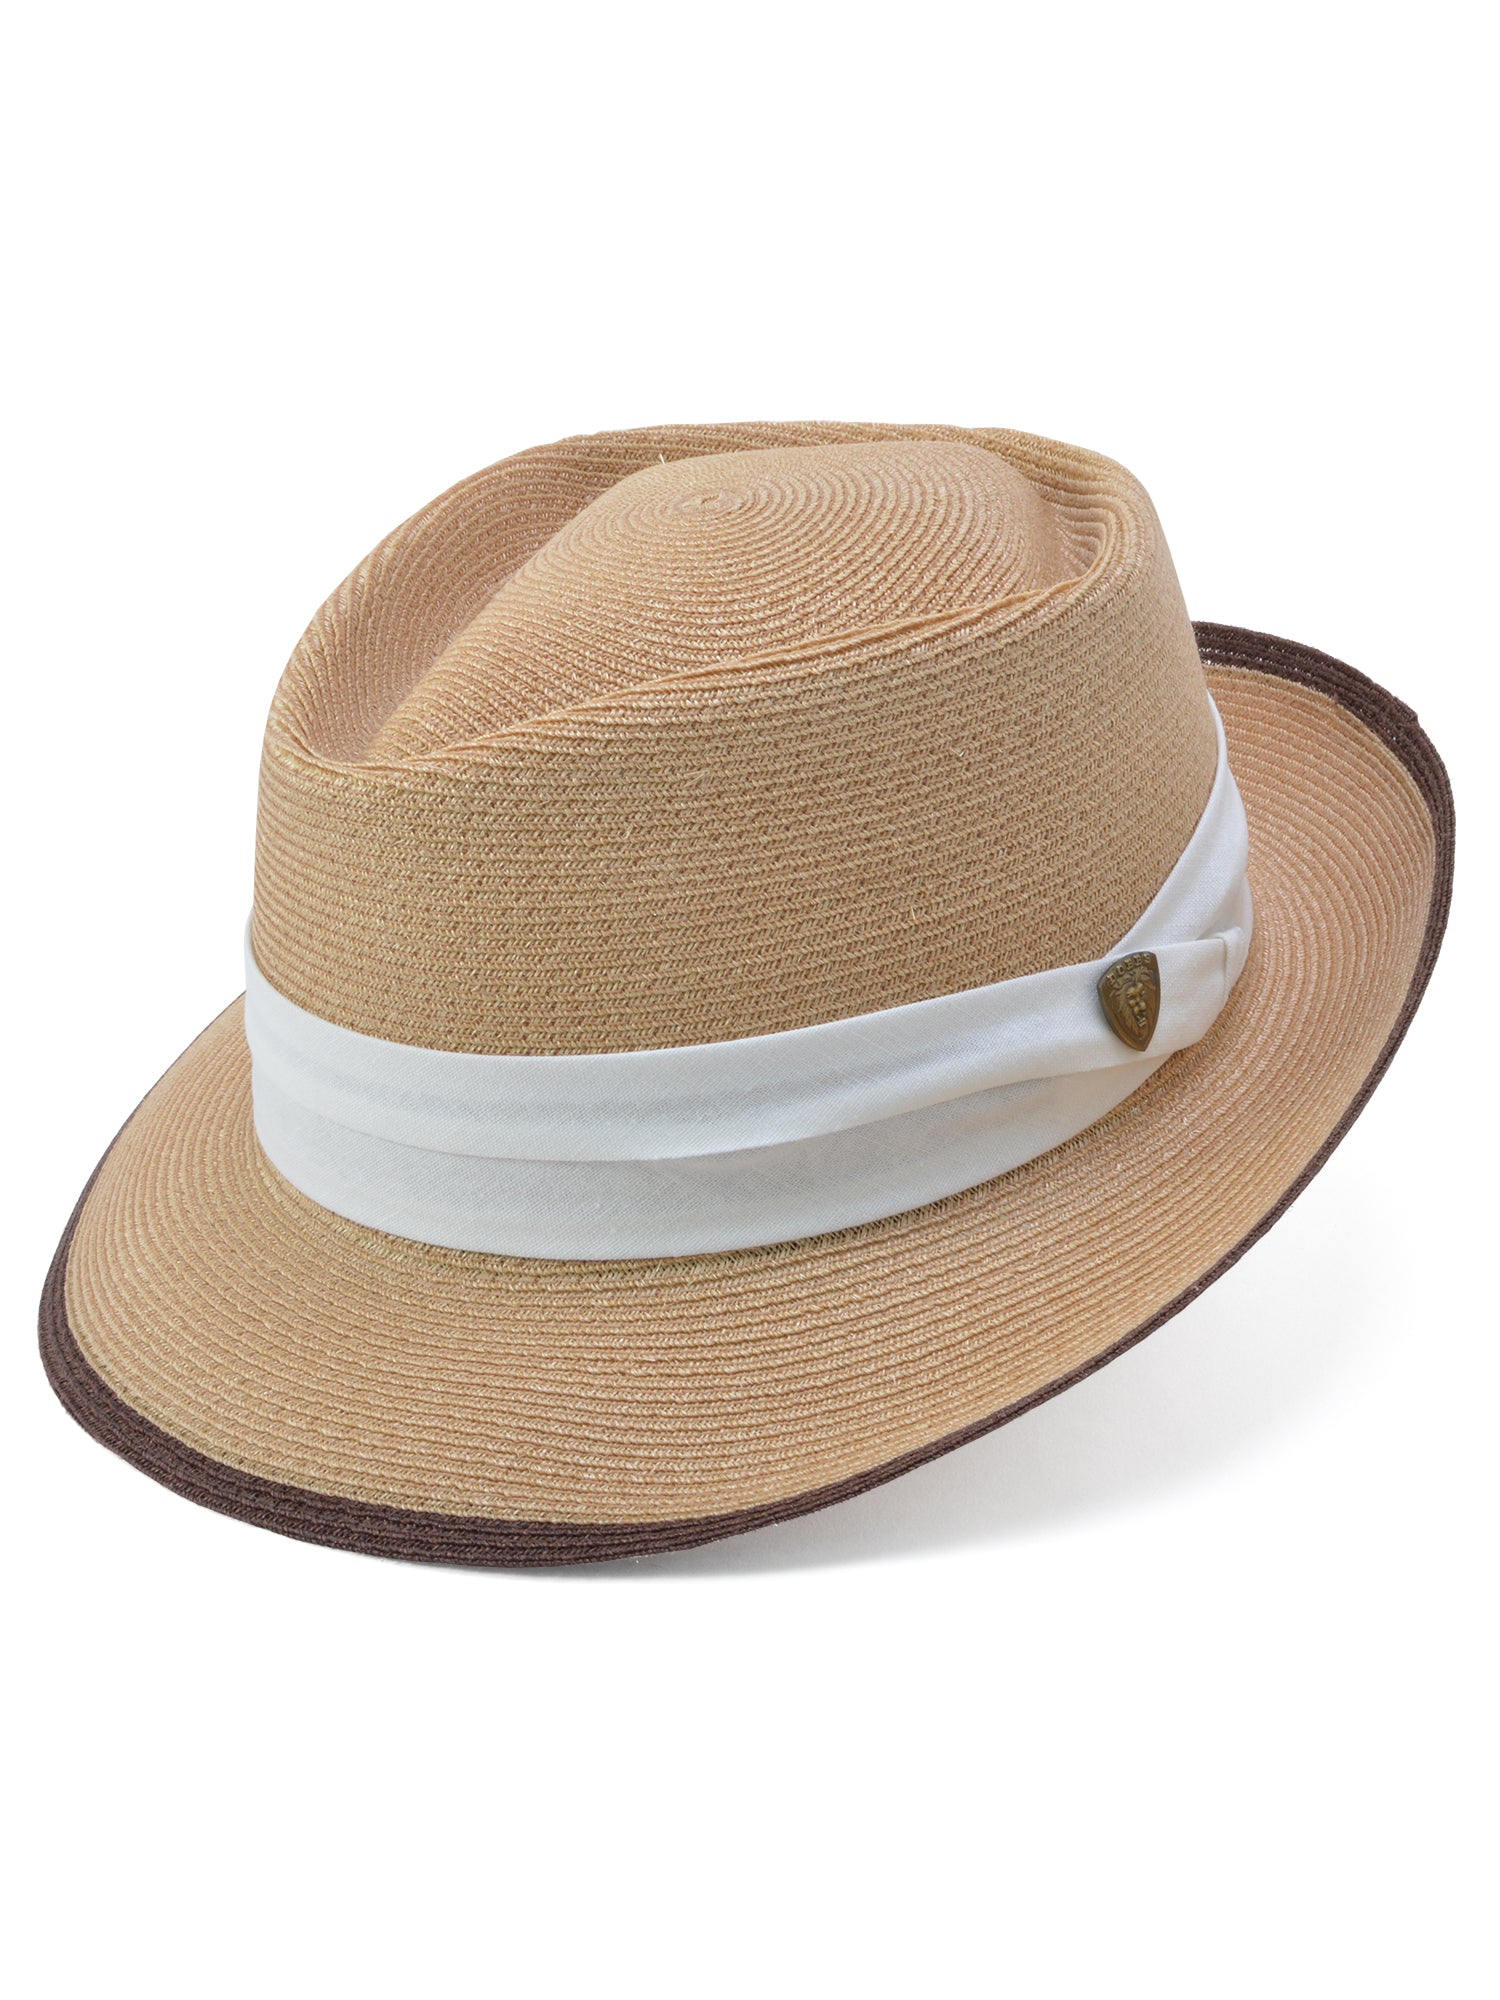 Dobbs The Lineup Hemp Straw Fedora Hat in Beige/Chocolate